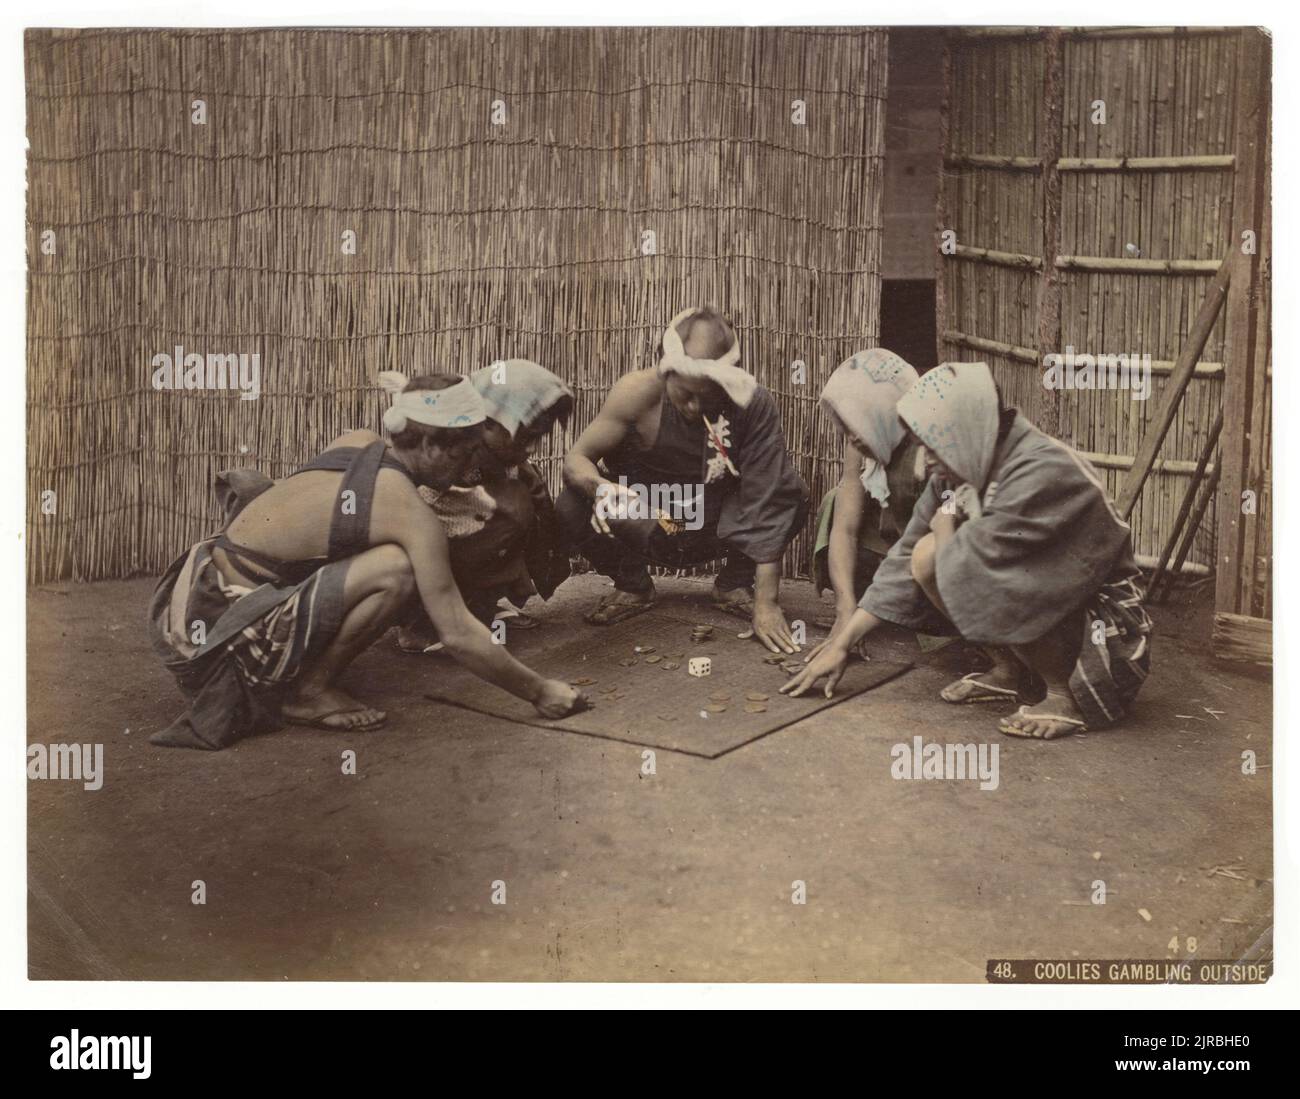 Coolies Gambling Outside, Japan, circa 1890. Photography by Kusakabe Kimbei (1841 - 1934). Stock Photo